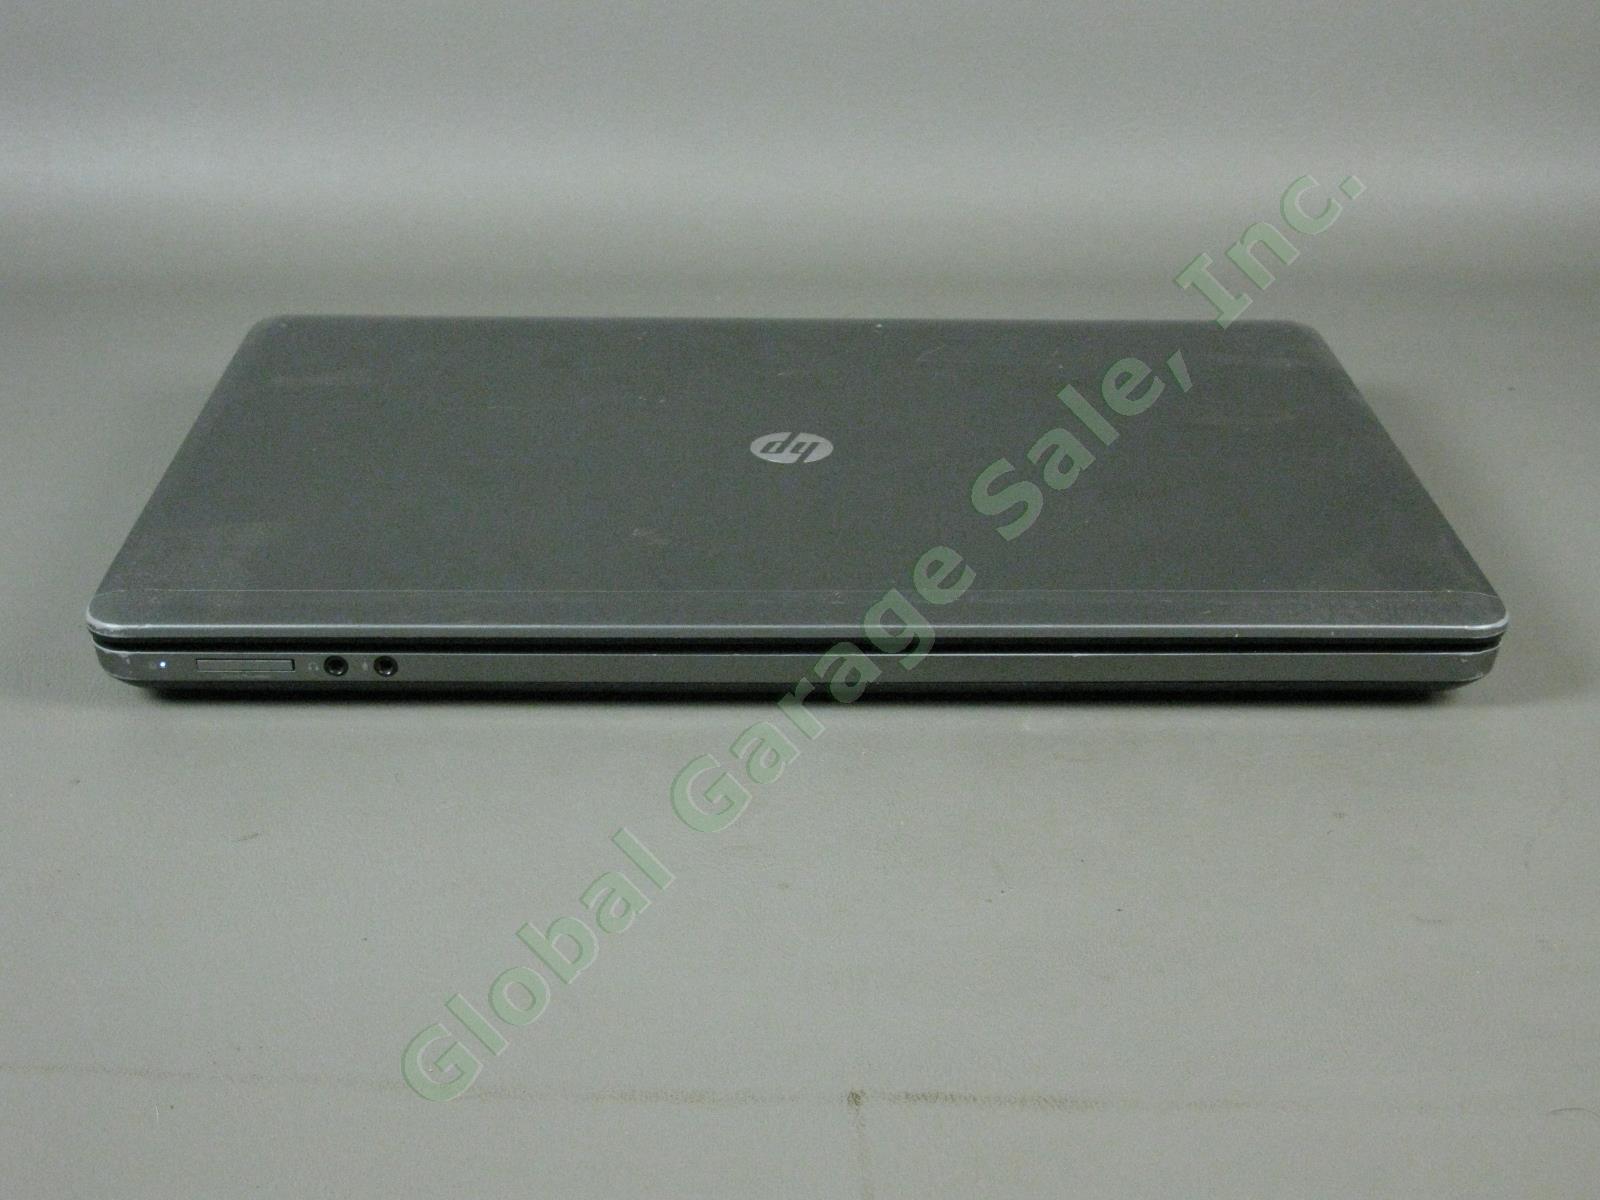 HP ProBook 4540s Laptop Intel i5 2.50GHz 294GB 4GB RAM Windows 10 Pro Refurb 3